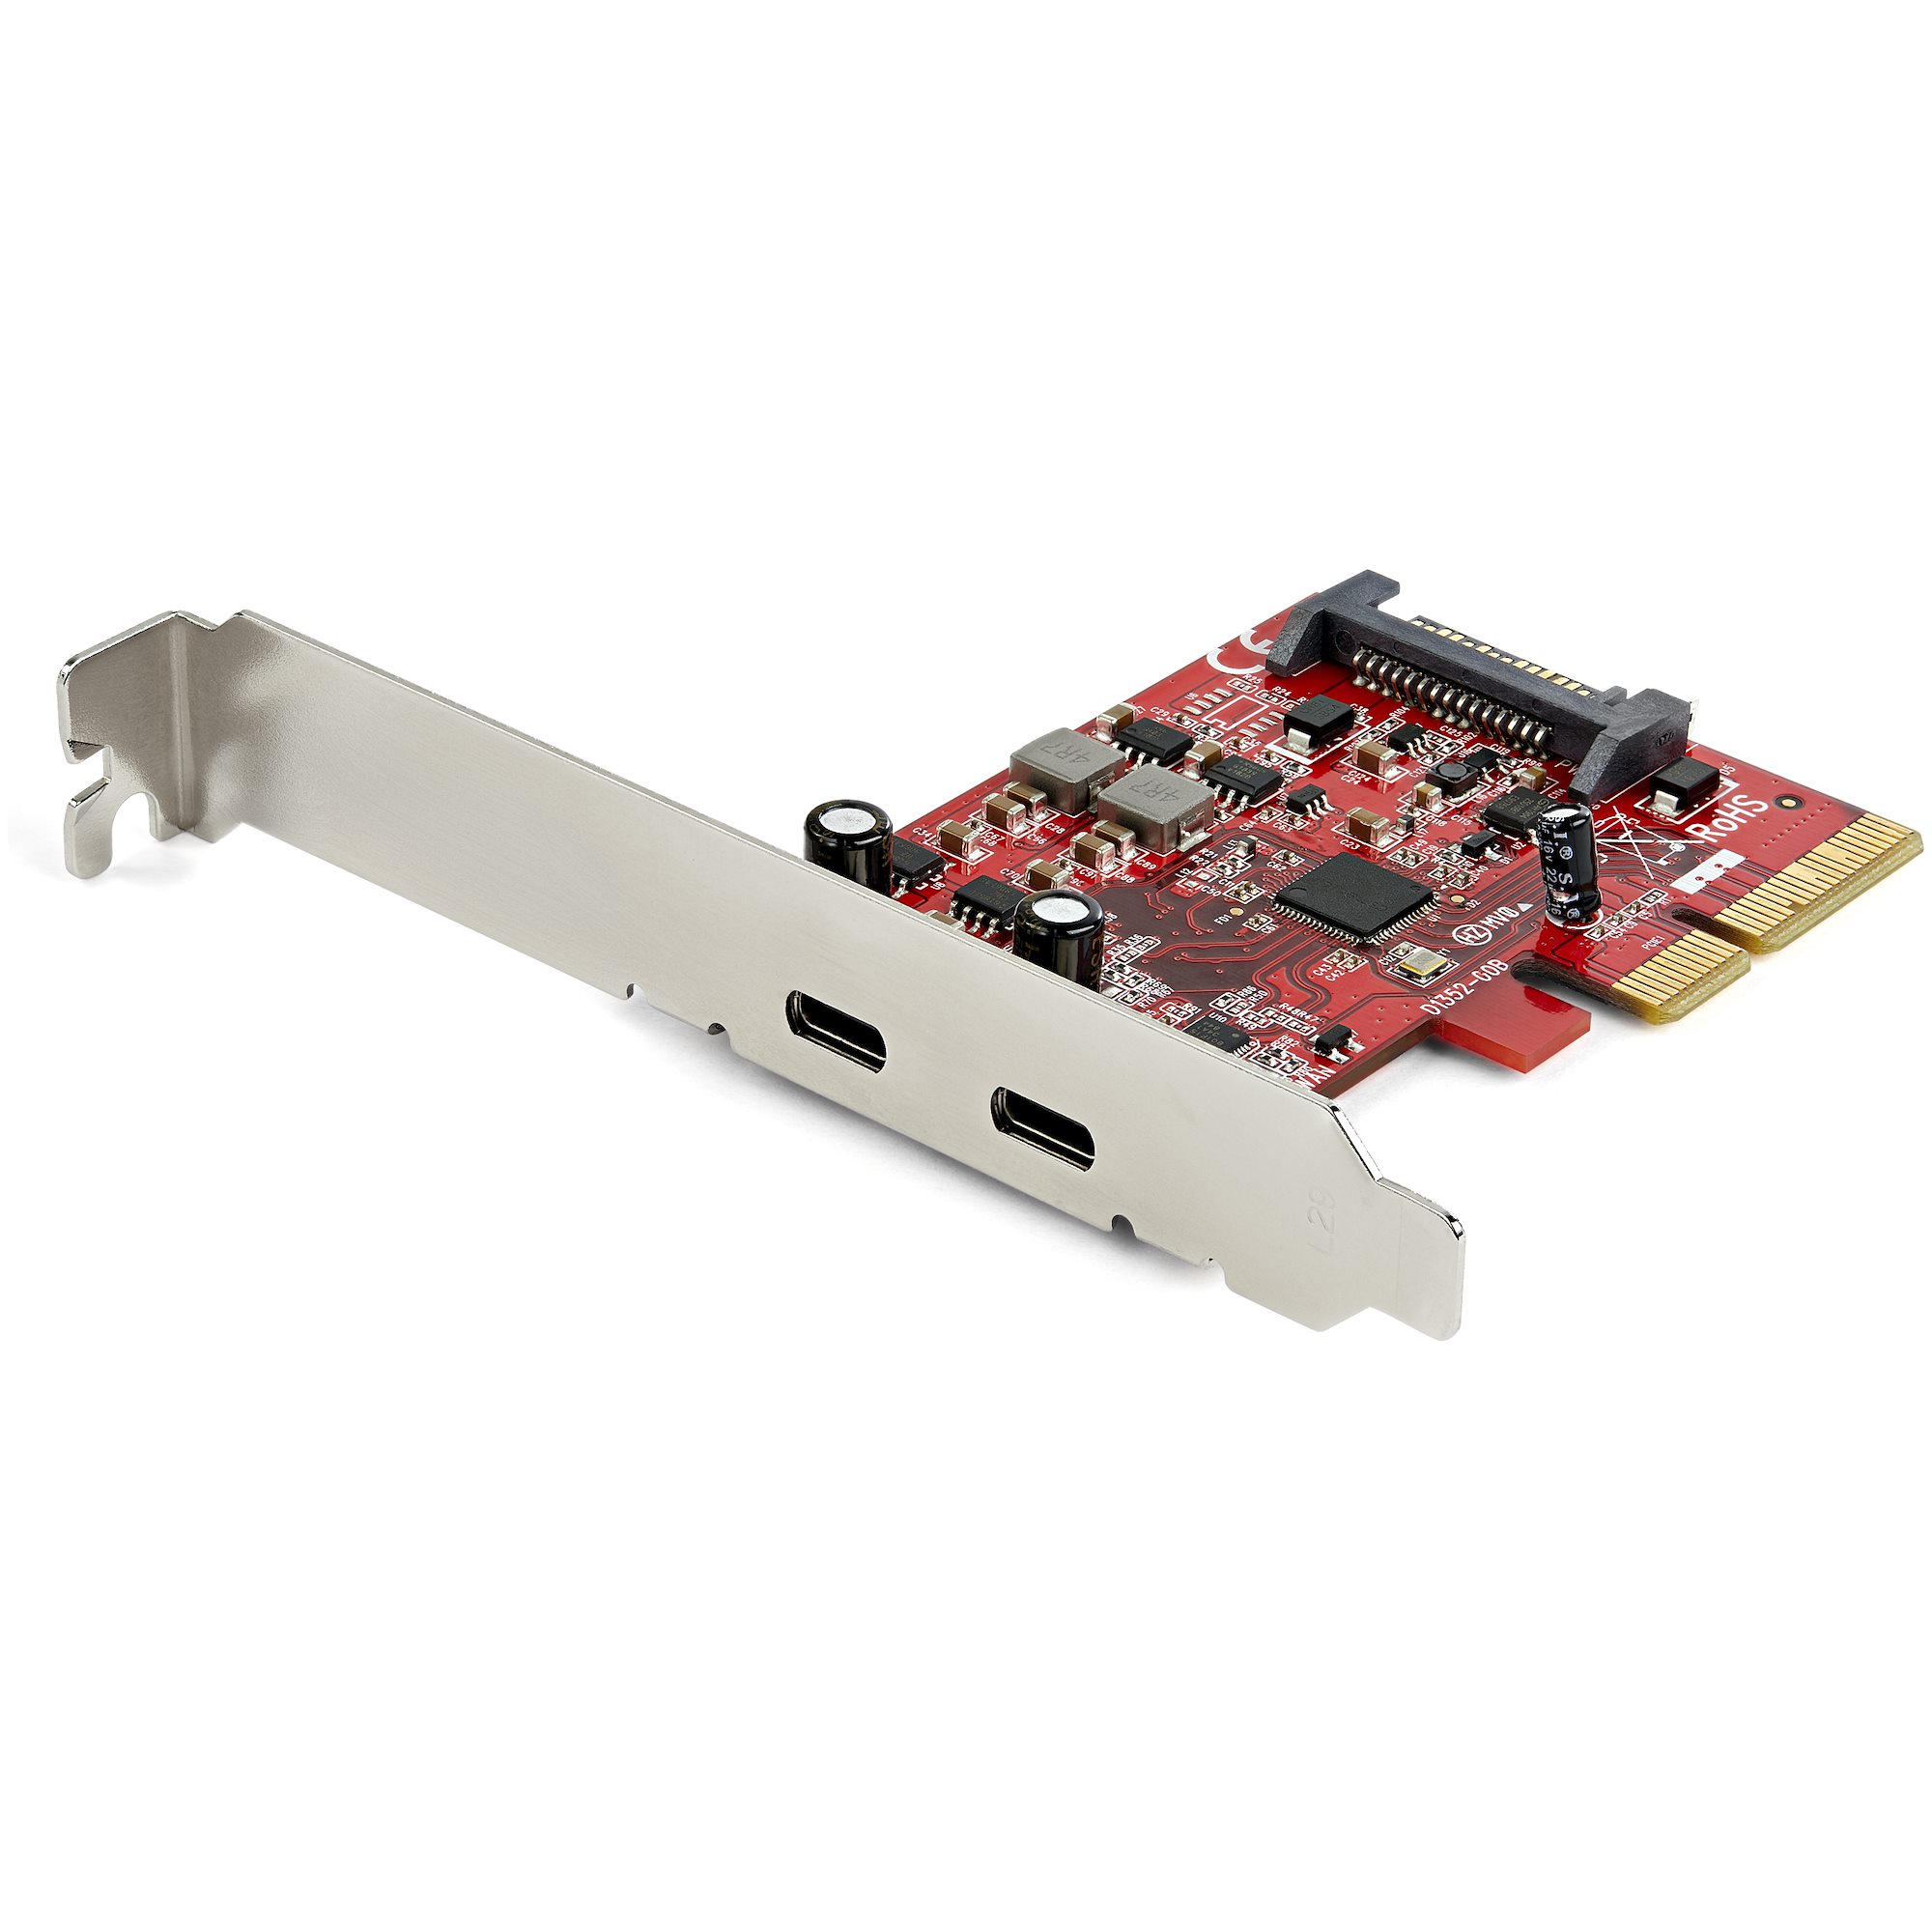 【PEXUSB312C3】2 PORT PCIE USB 3.1 CARD